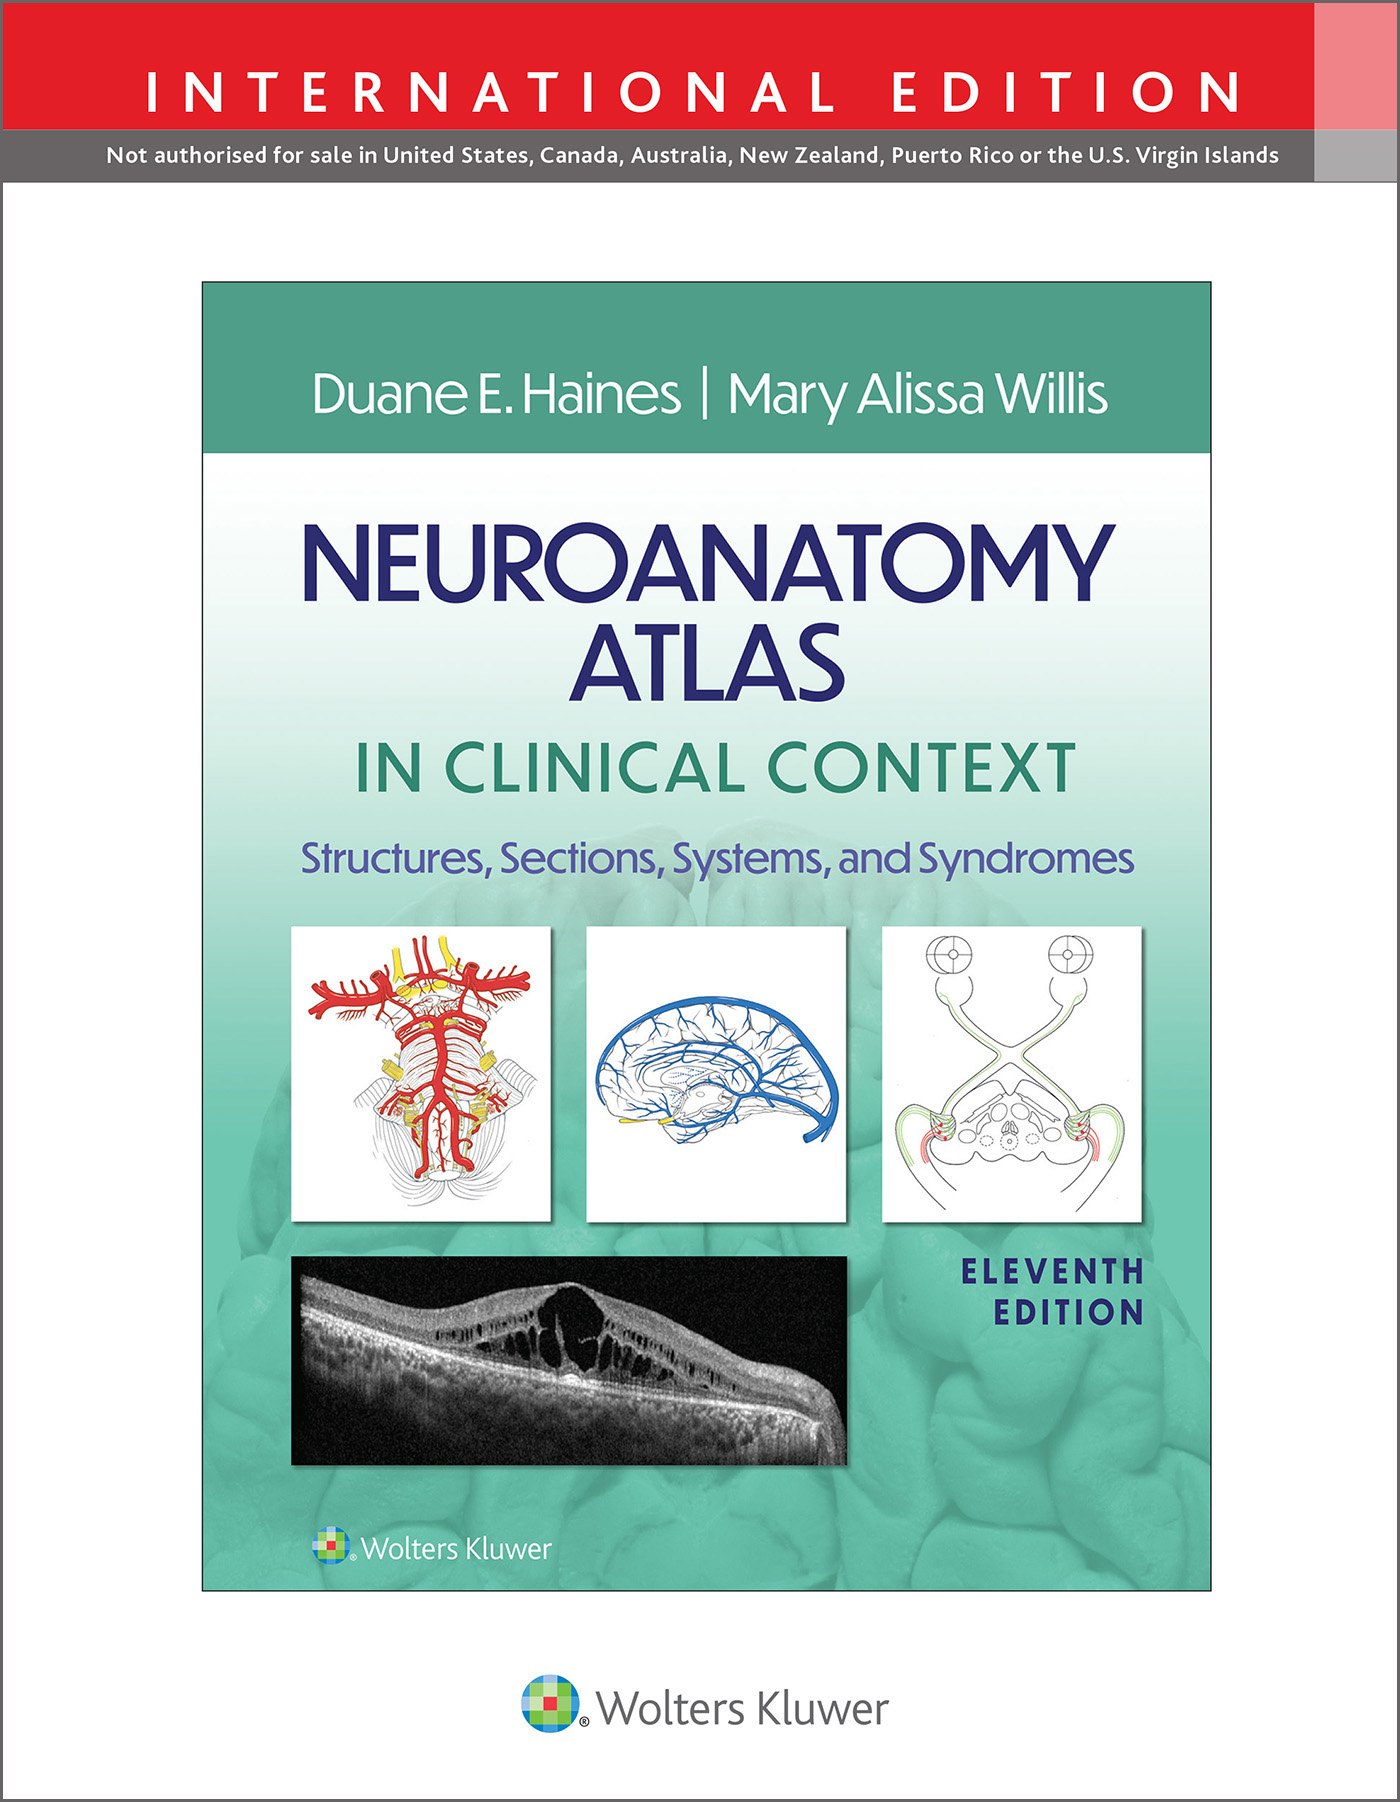 Neuroanatomy Atlas in Clinical Context, 11th ed.(Int'l ed.)